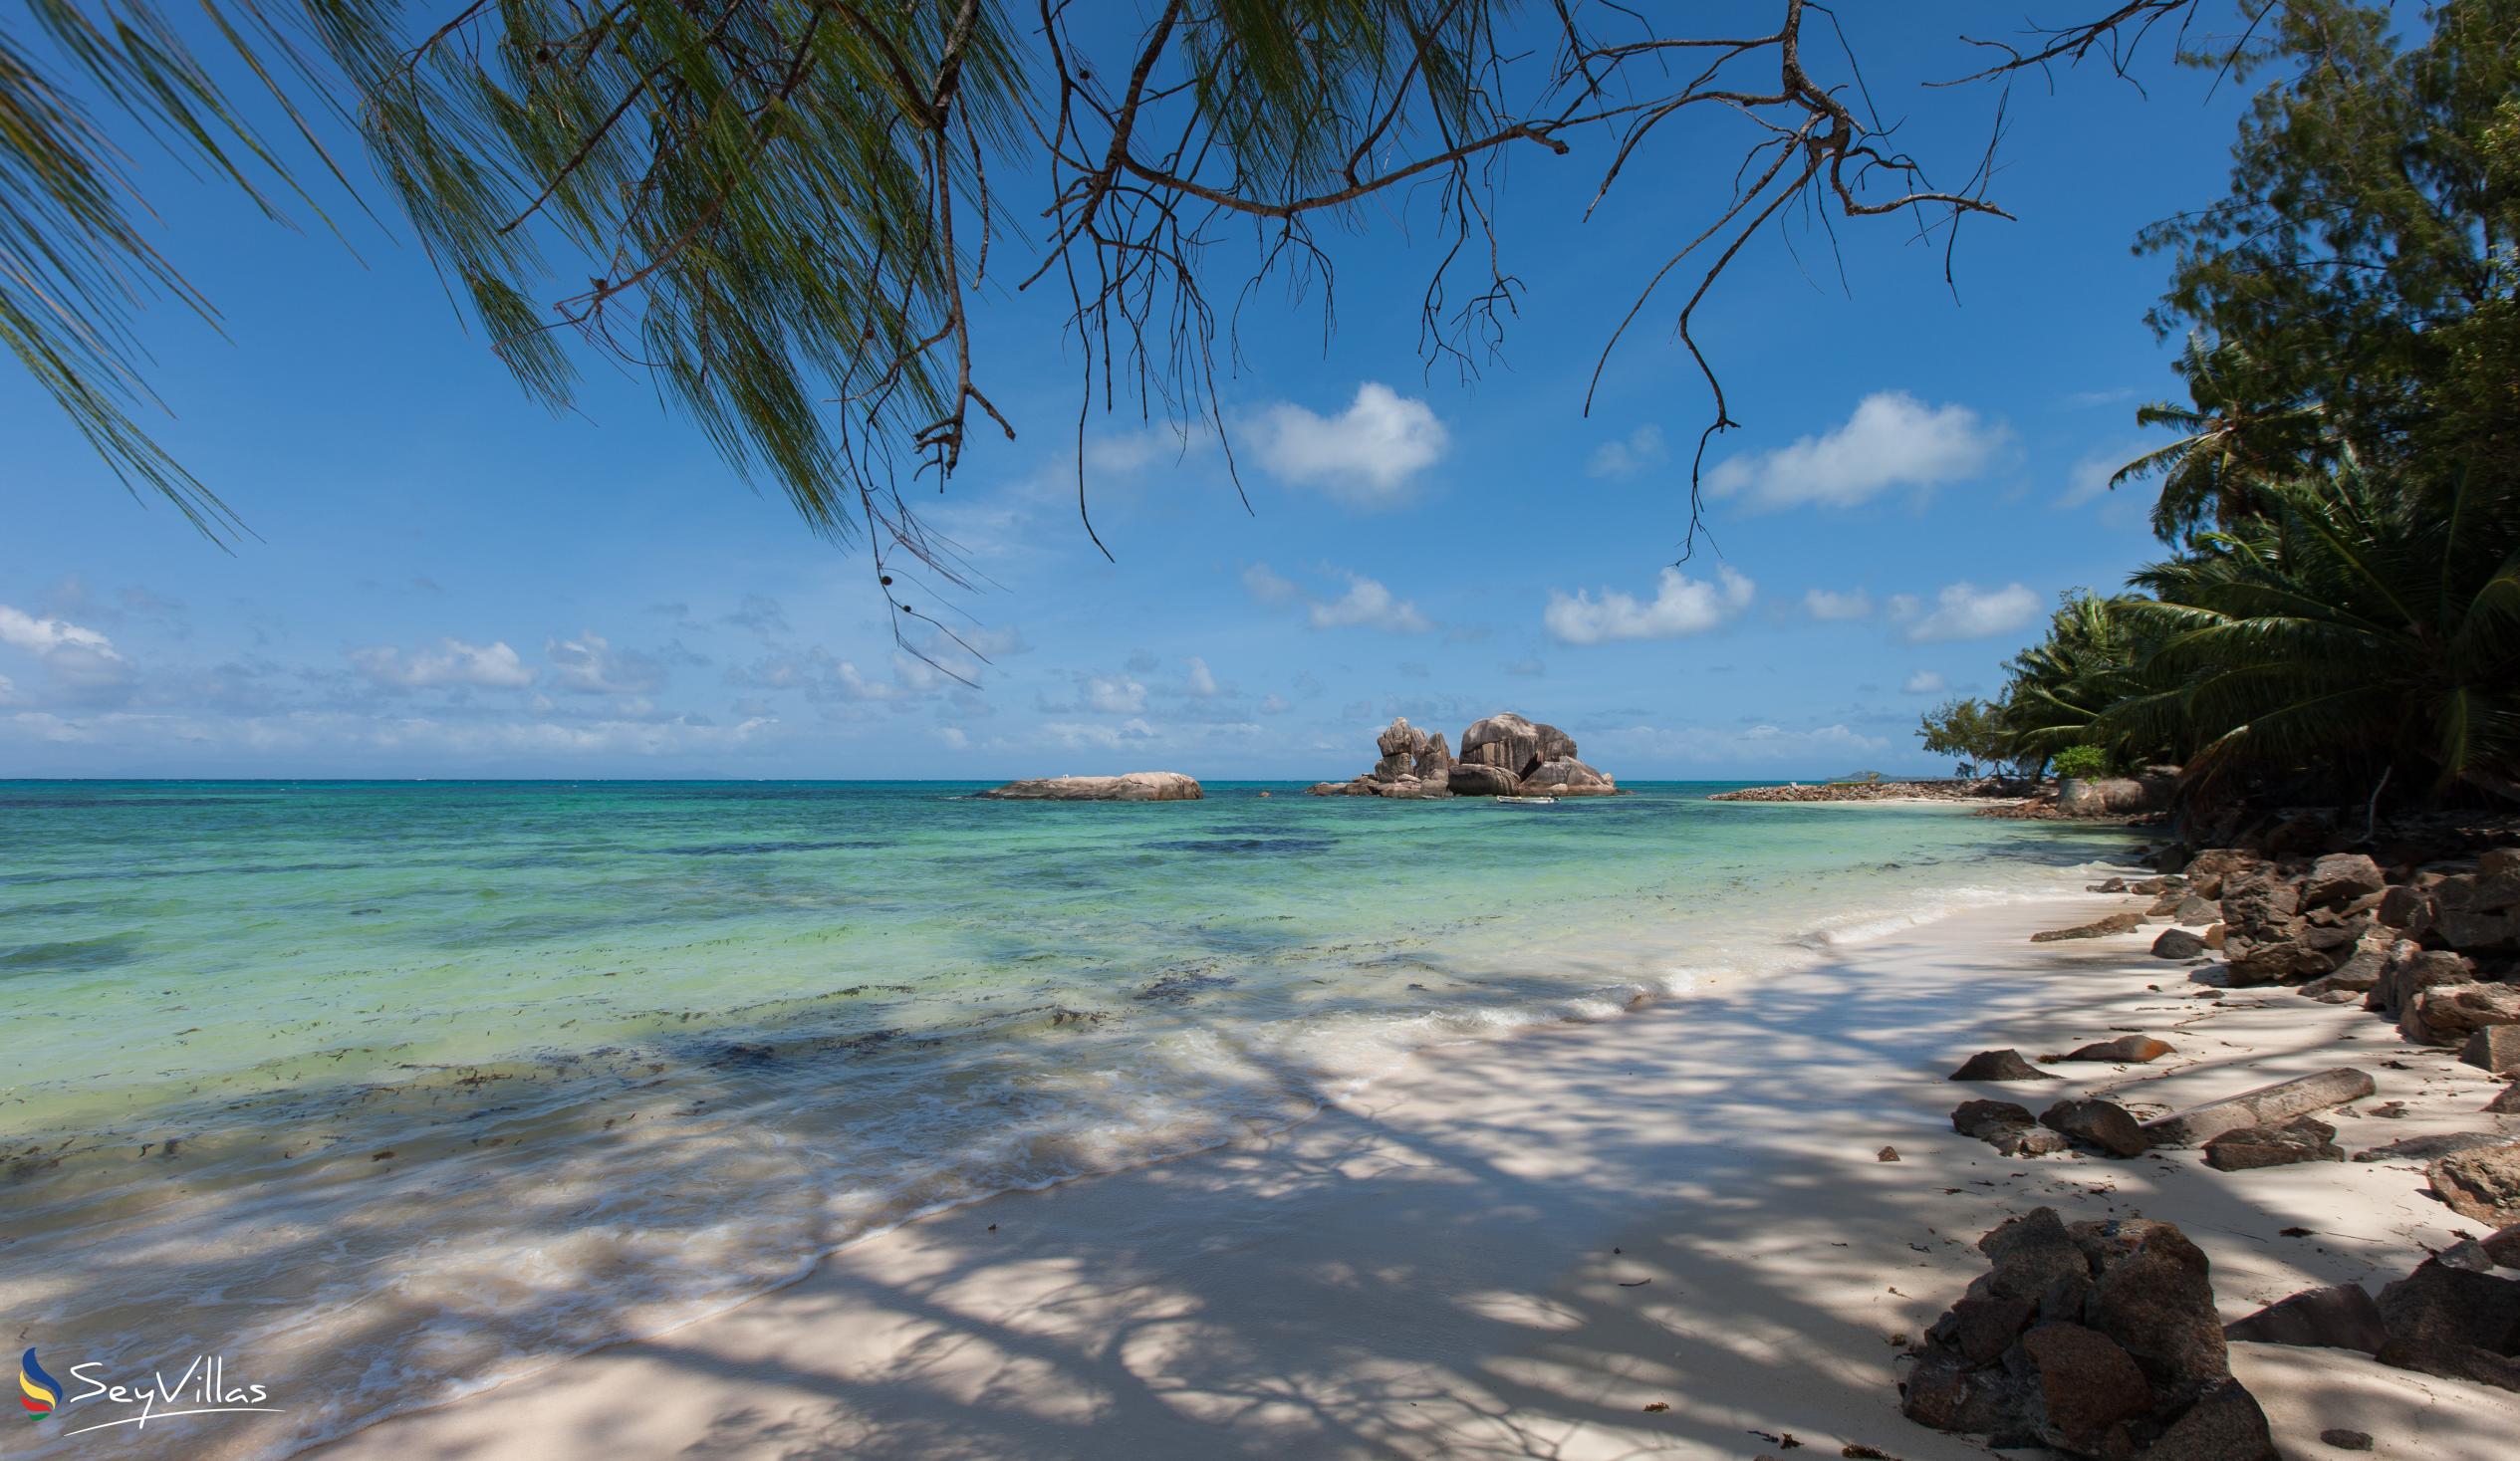 Photo 42: YASAD Luxury Beach Residence - Location - Praslin (Seychelles)